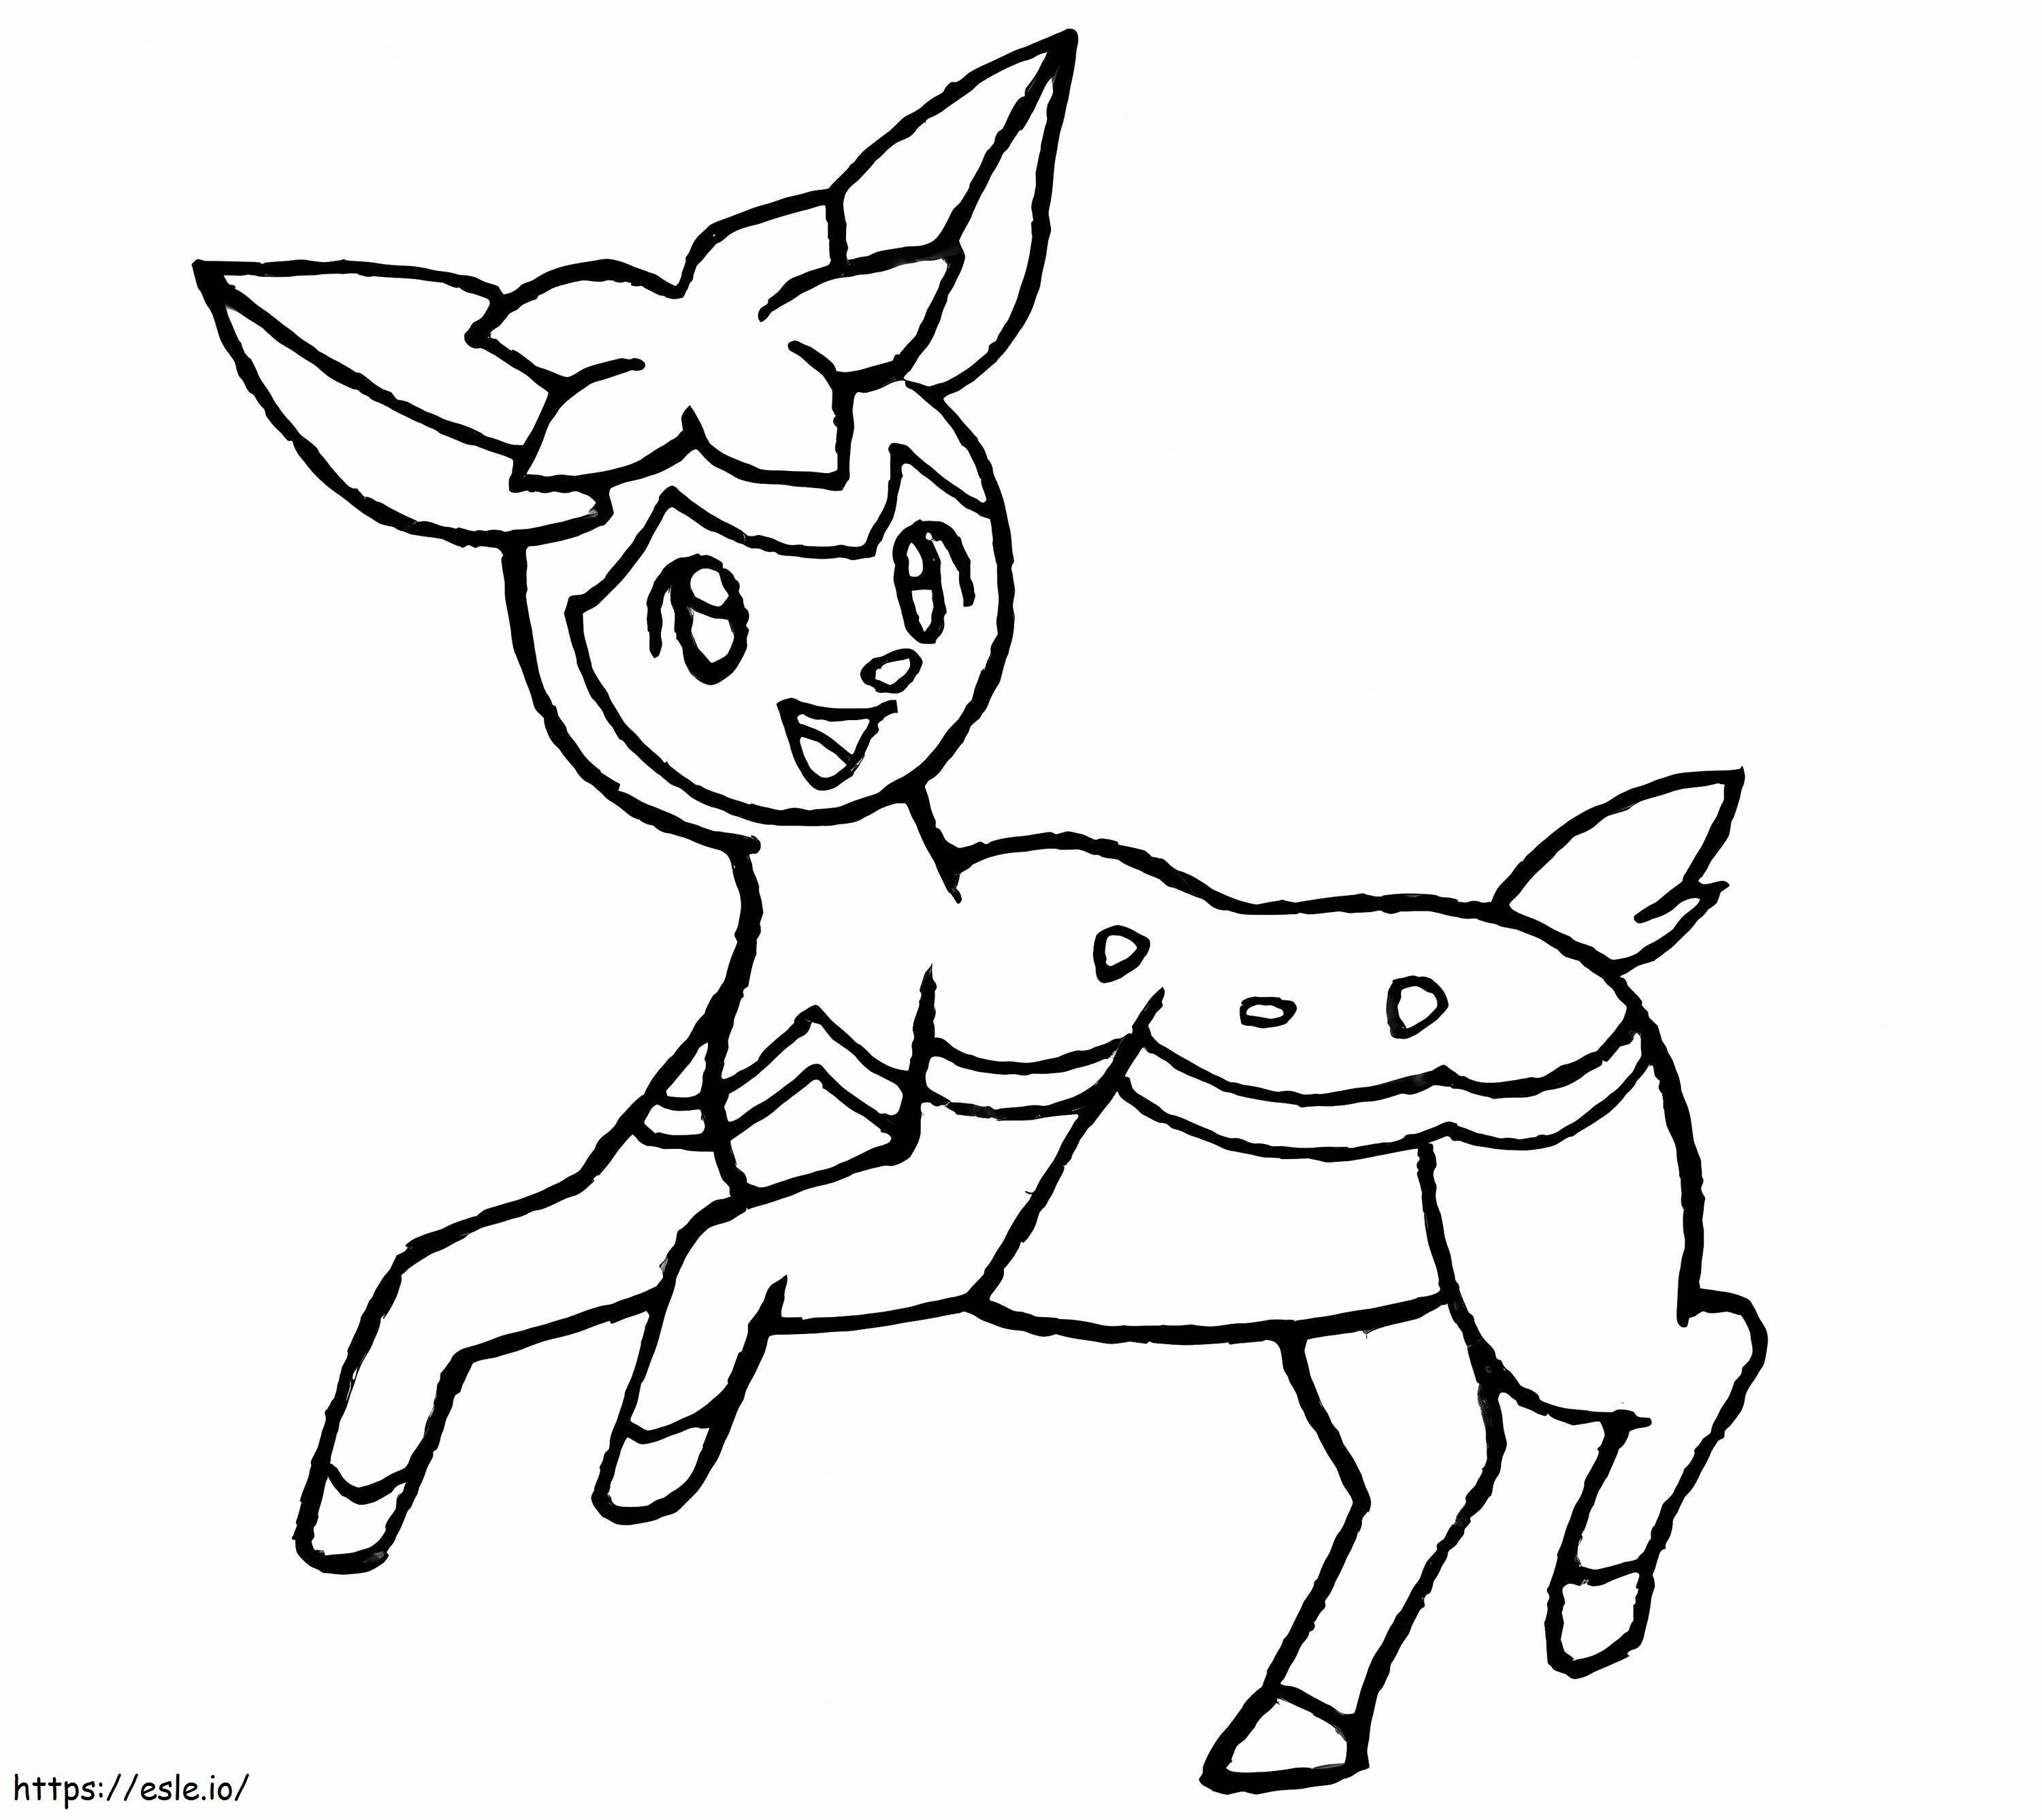 Coloriage Cerf Pokémon 2 à imprimer dessin